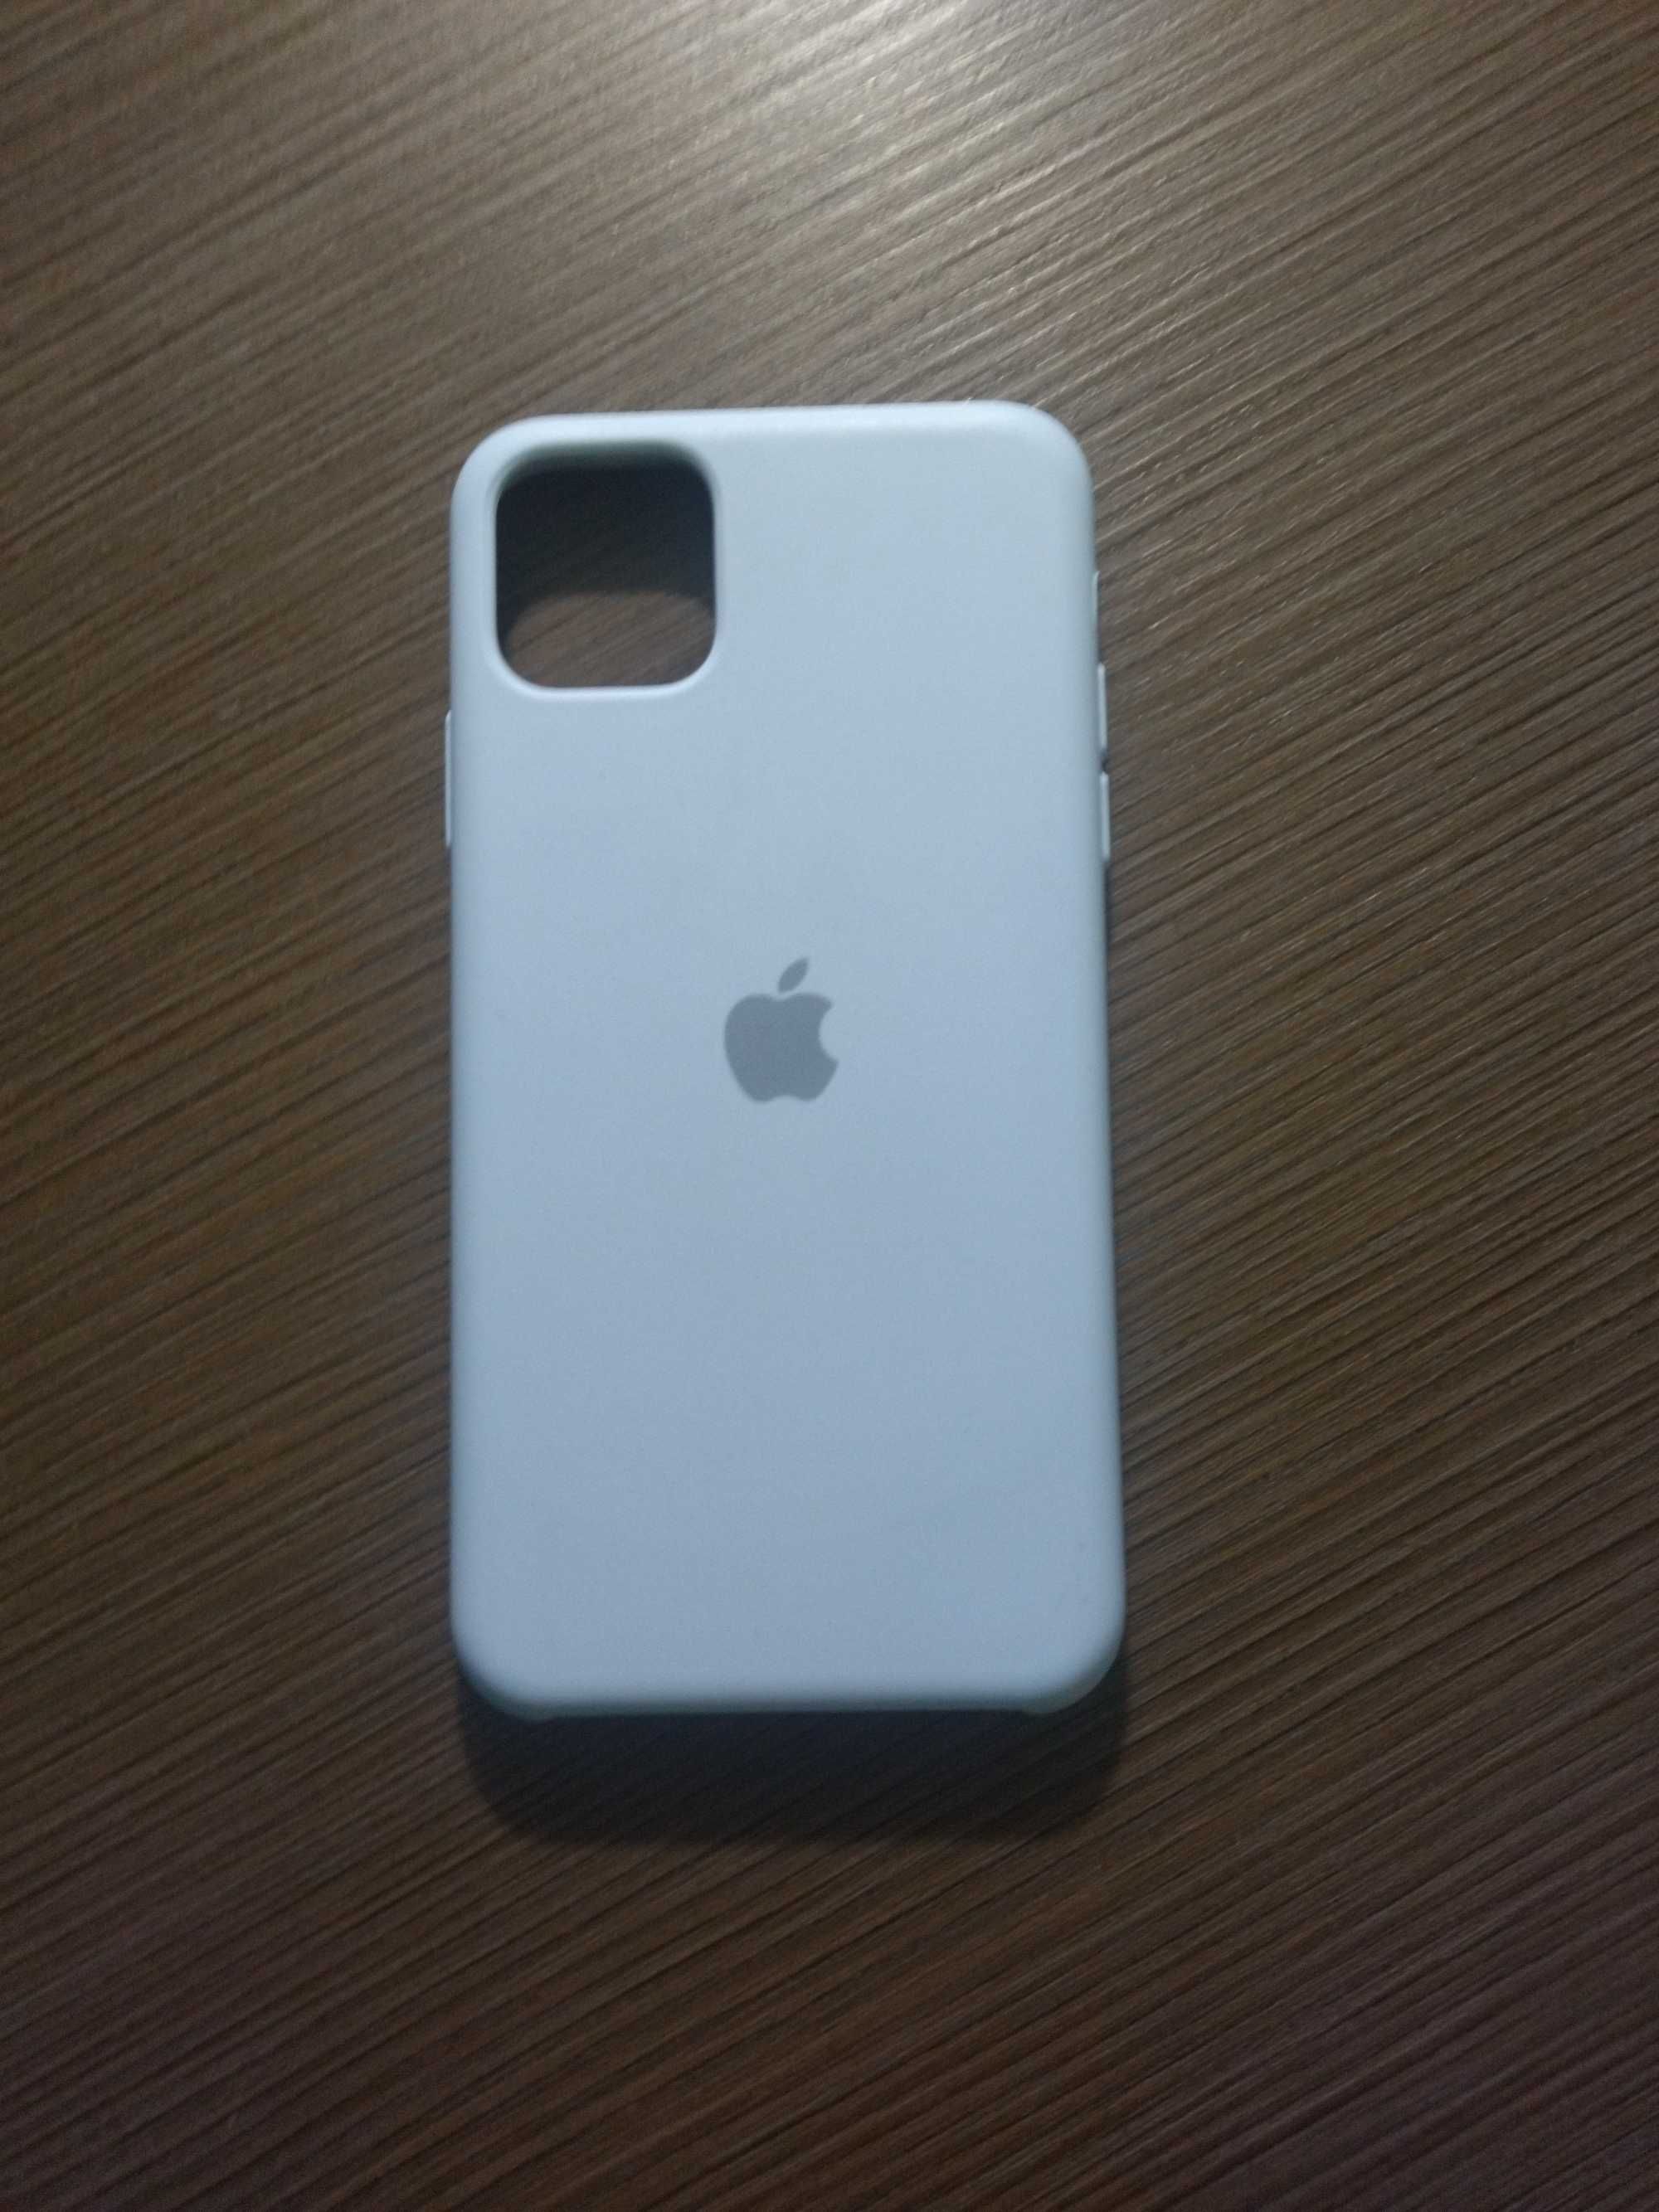 Schimb husa iPhone 11 pro max originala cu alta husa originala